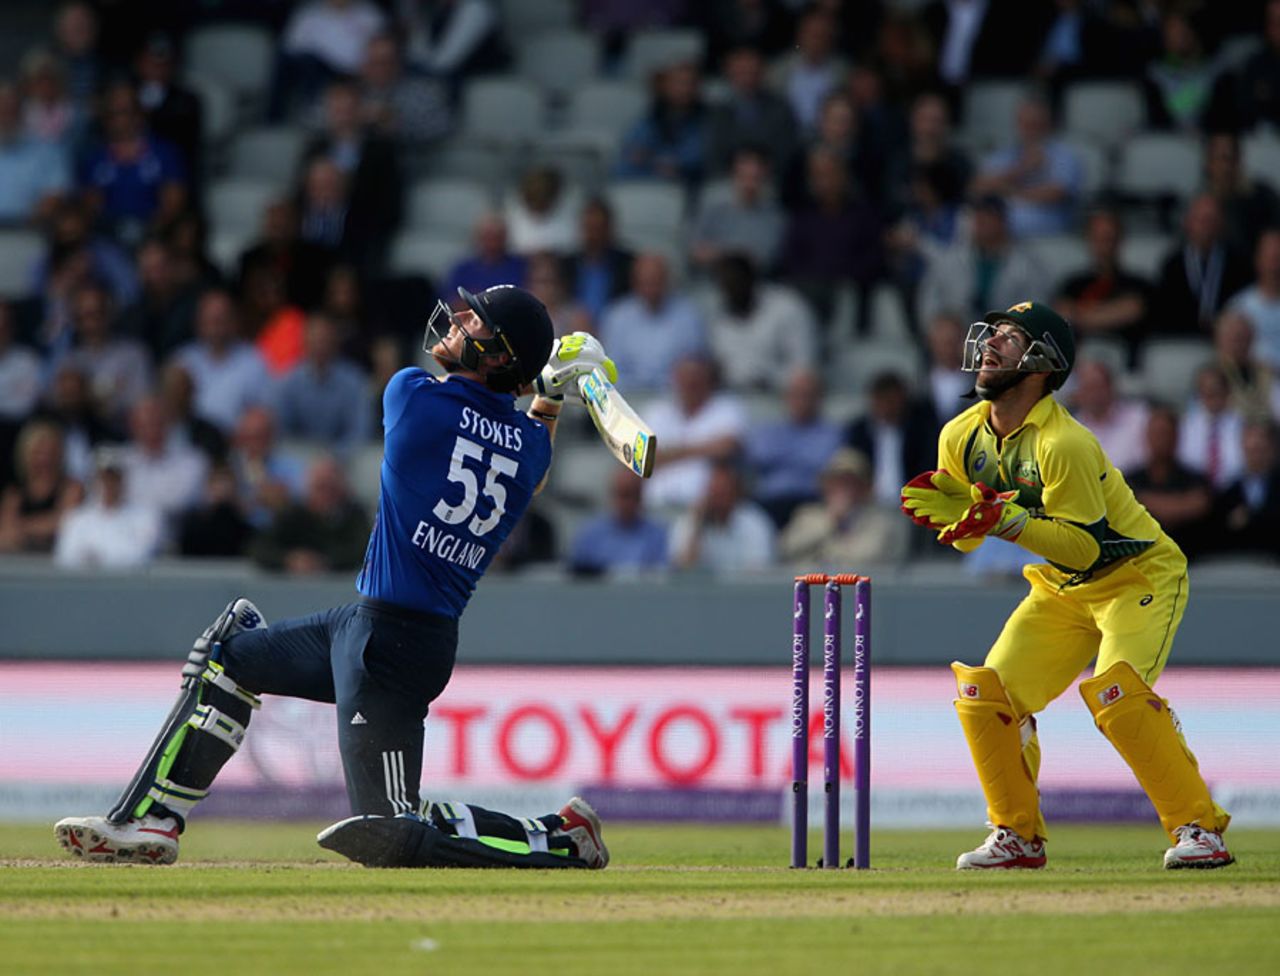 Ben Stokes struggled before slogging a catch, England v Australia, 3rd ODI, Old Trafford, September 8, 2015